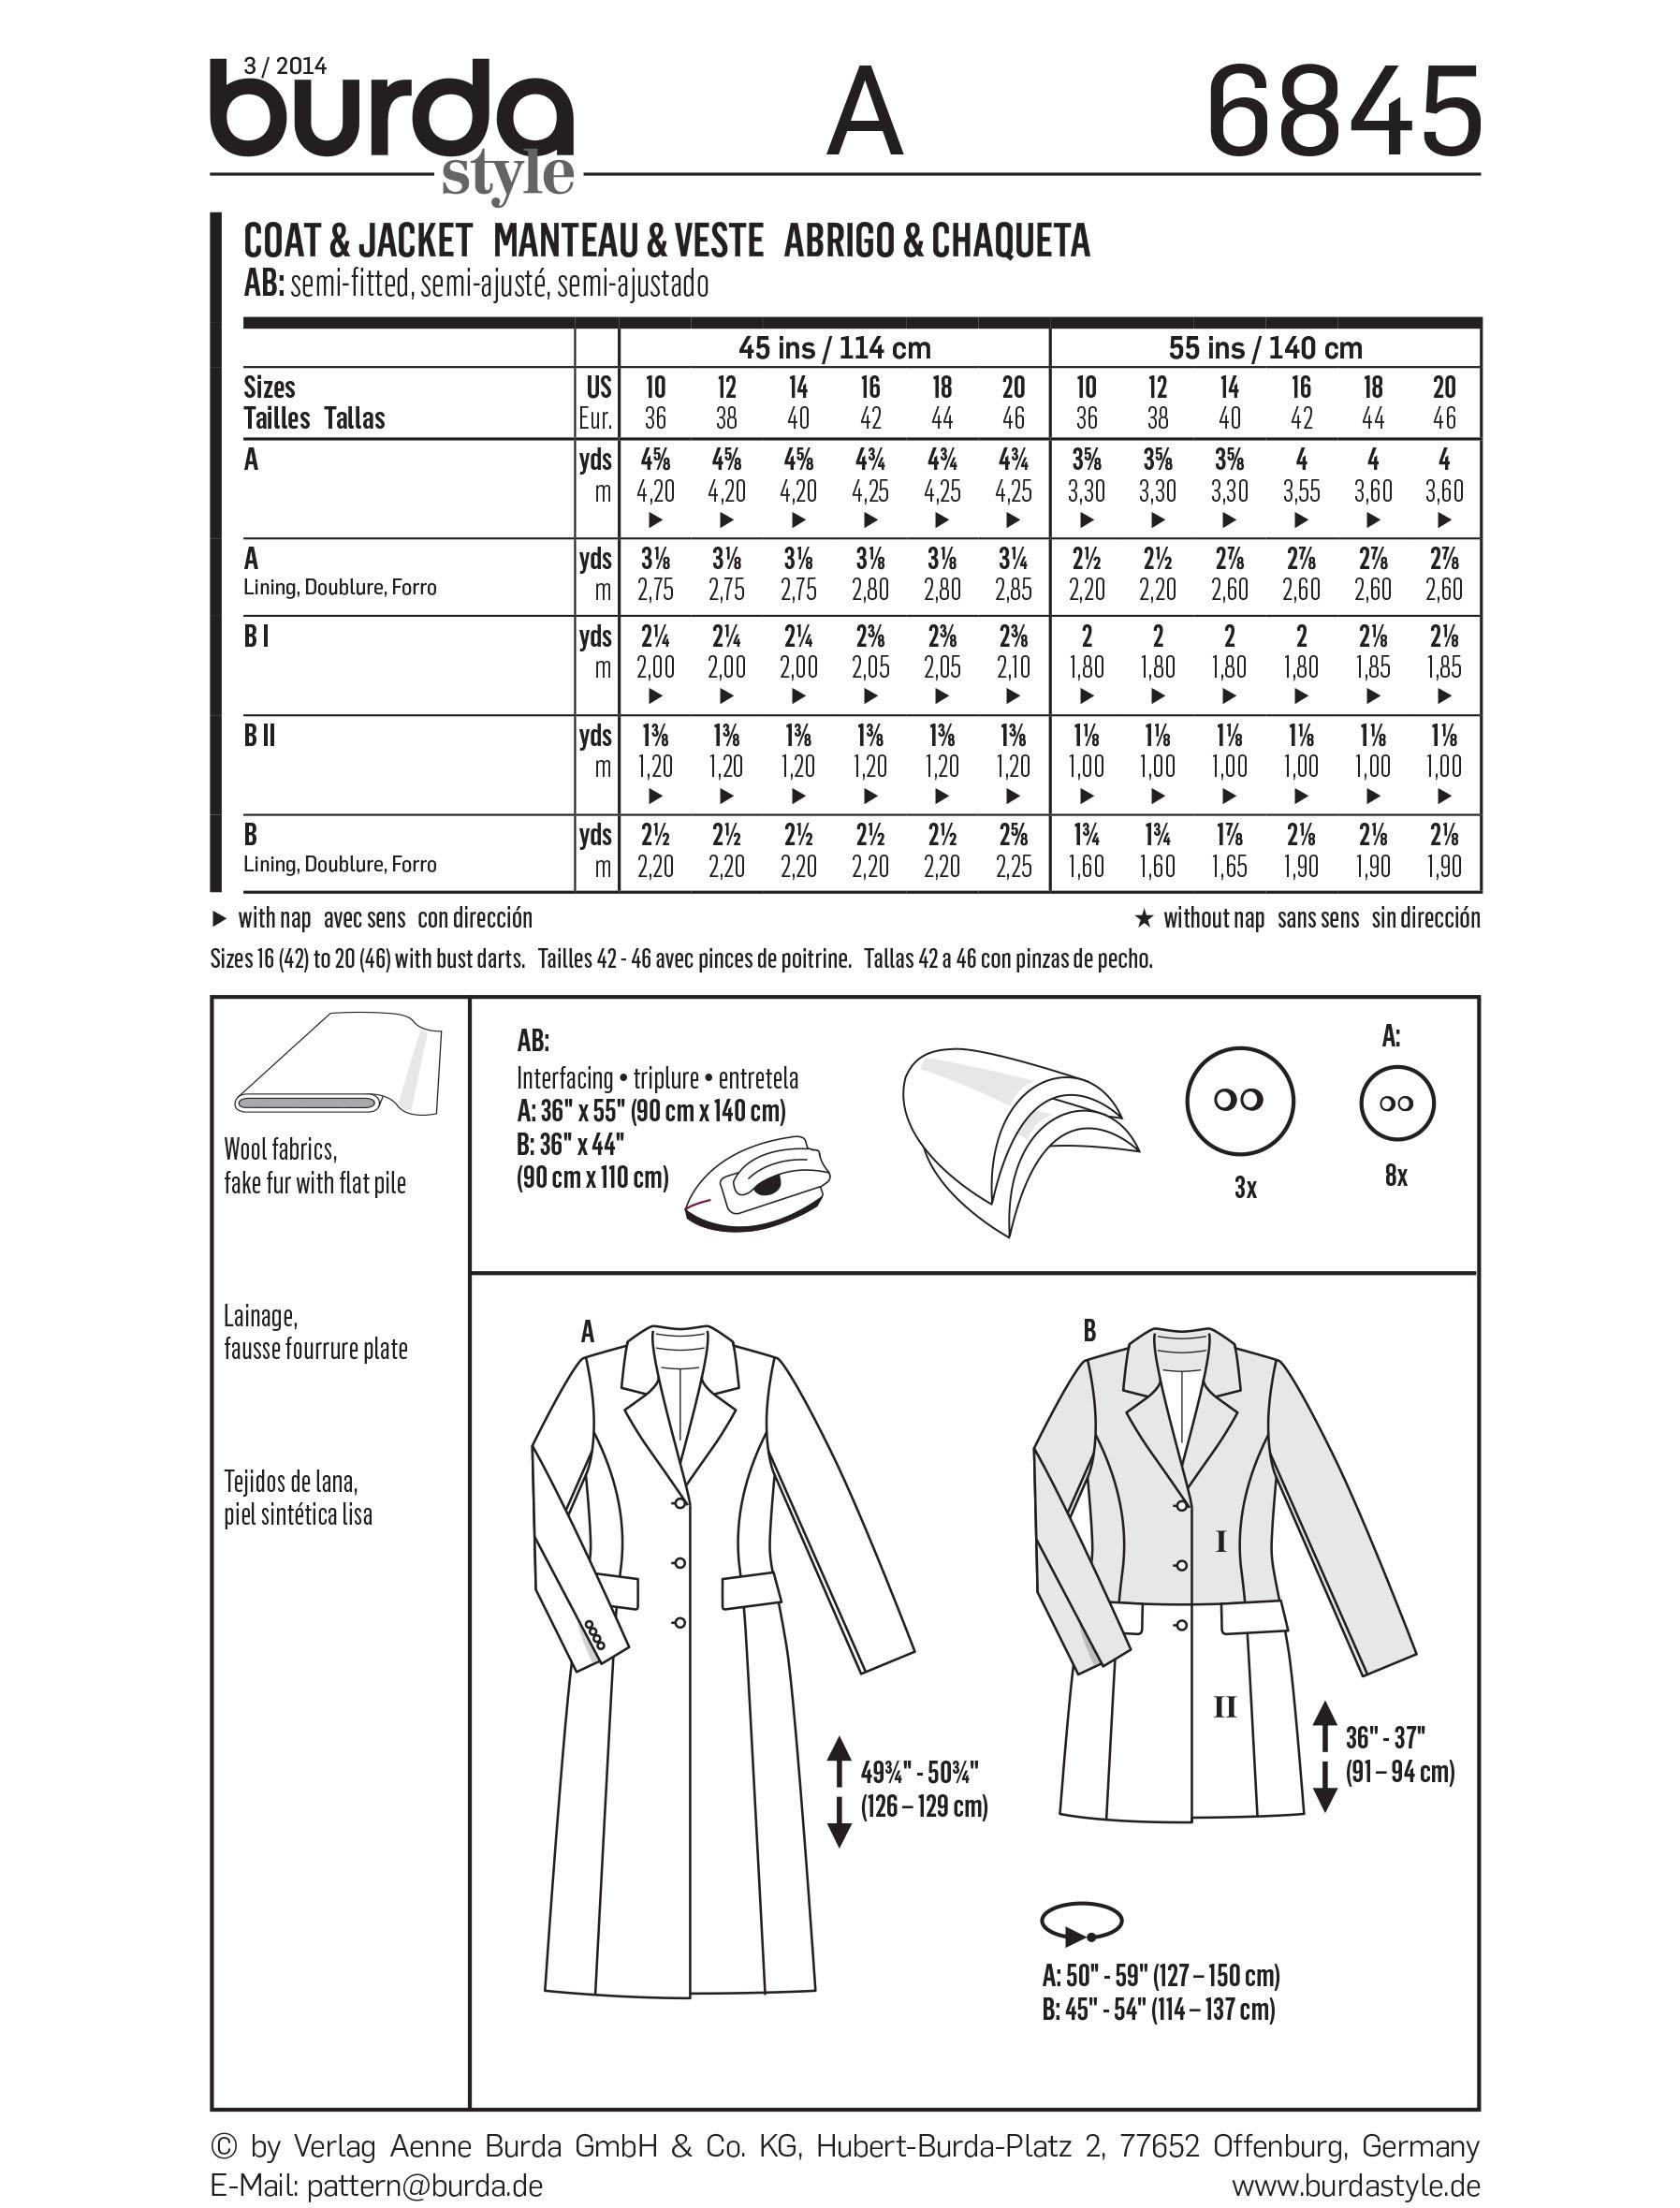 Burda B6845 Jacket, Coat & Vest Sewing Pattern